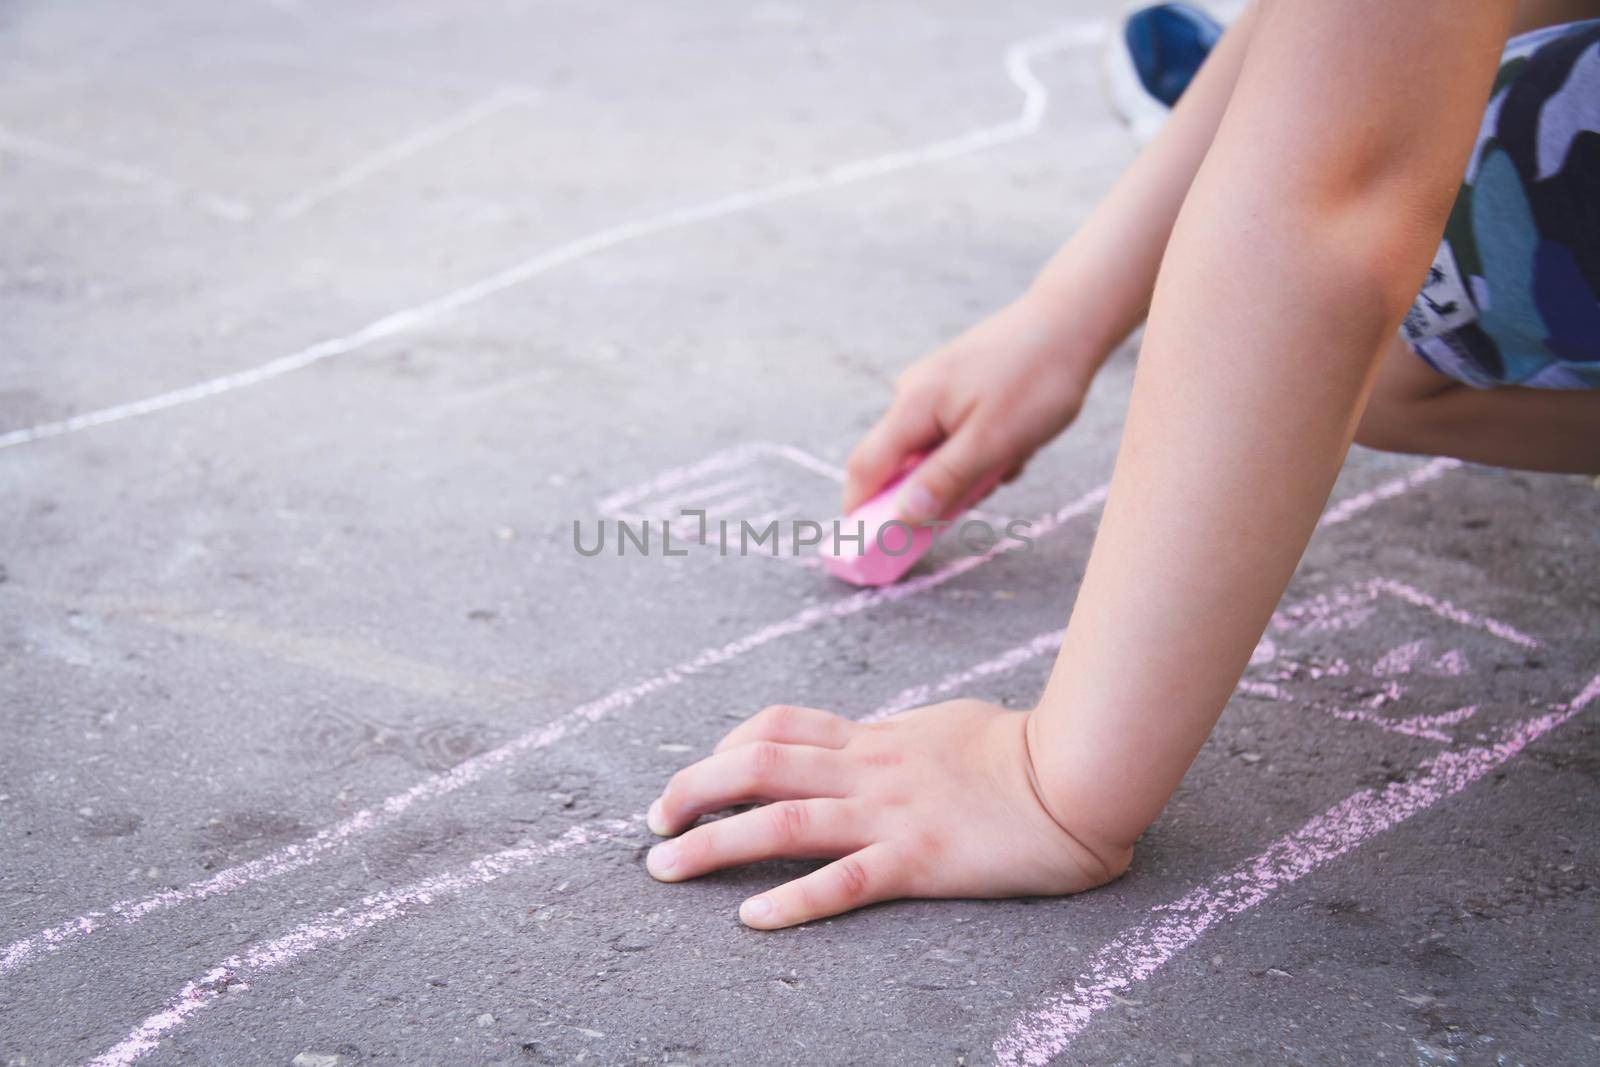 Children draw with chalk on the road. Children's creativity on the street. by Verrone